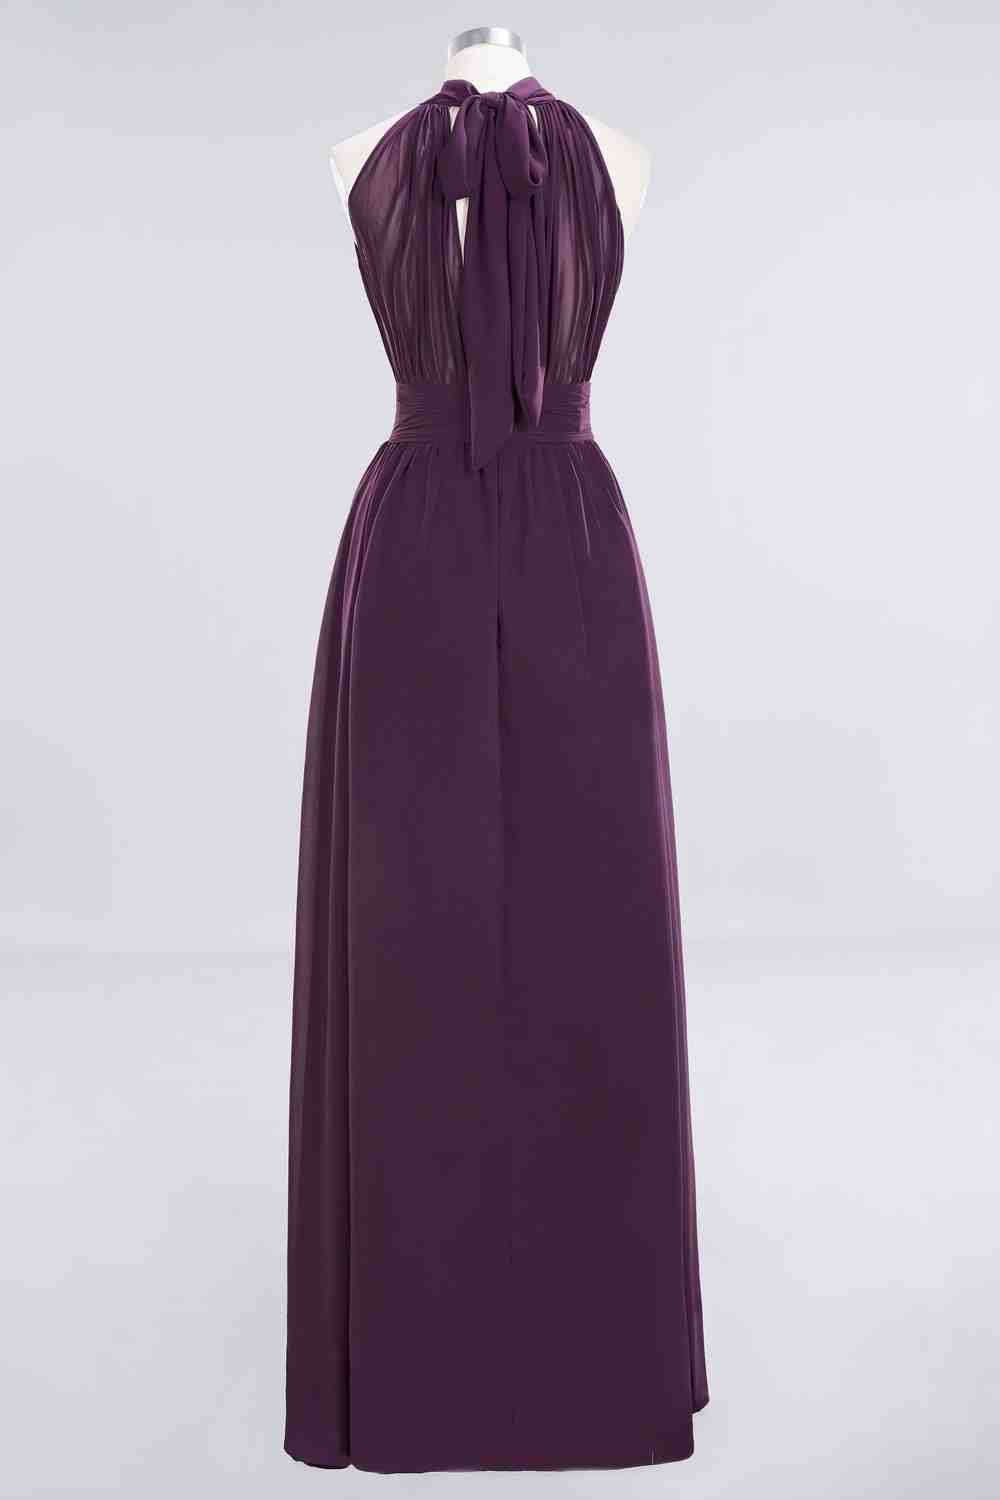 Grape A-line Halter Bow Tie Back Chiffon Long Bridesmaid Dress